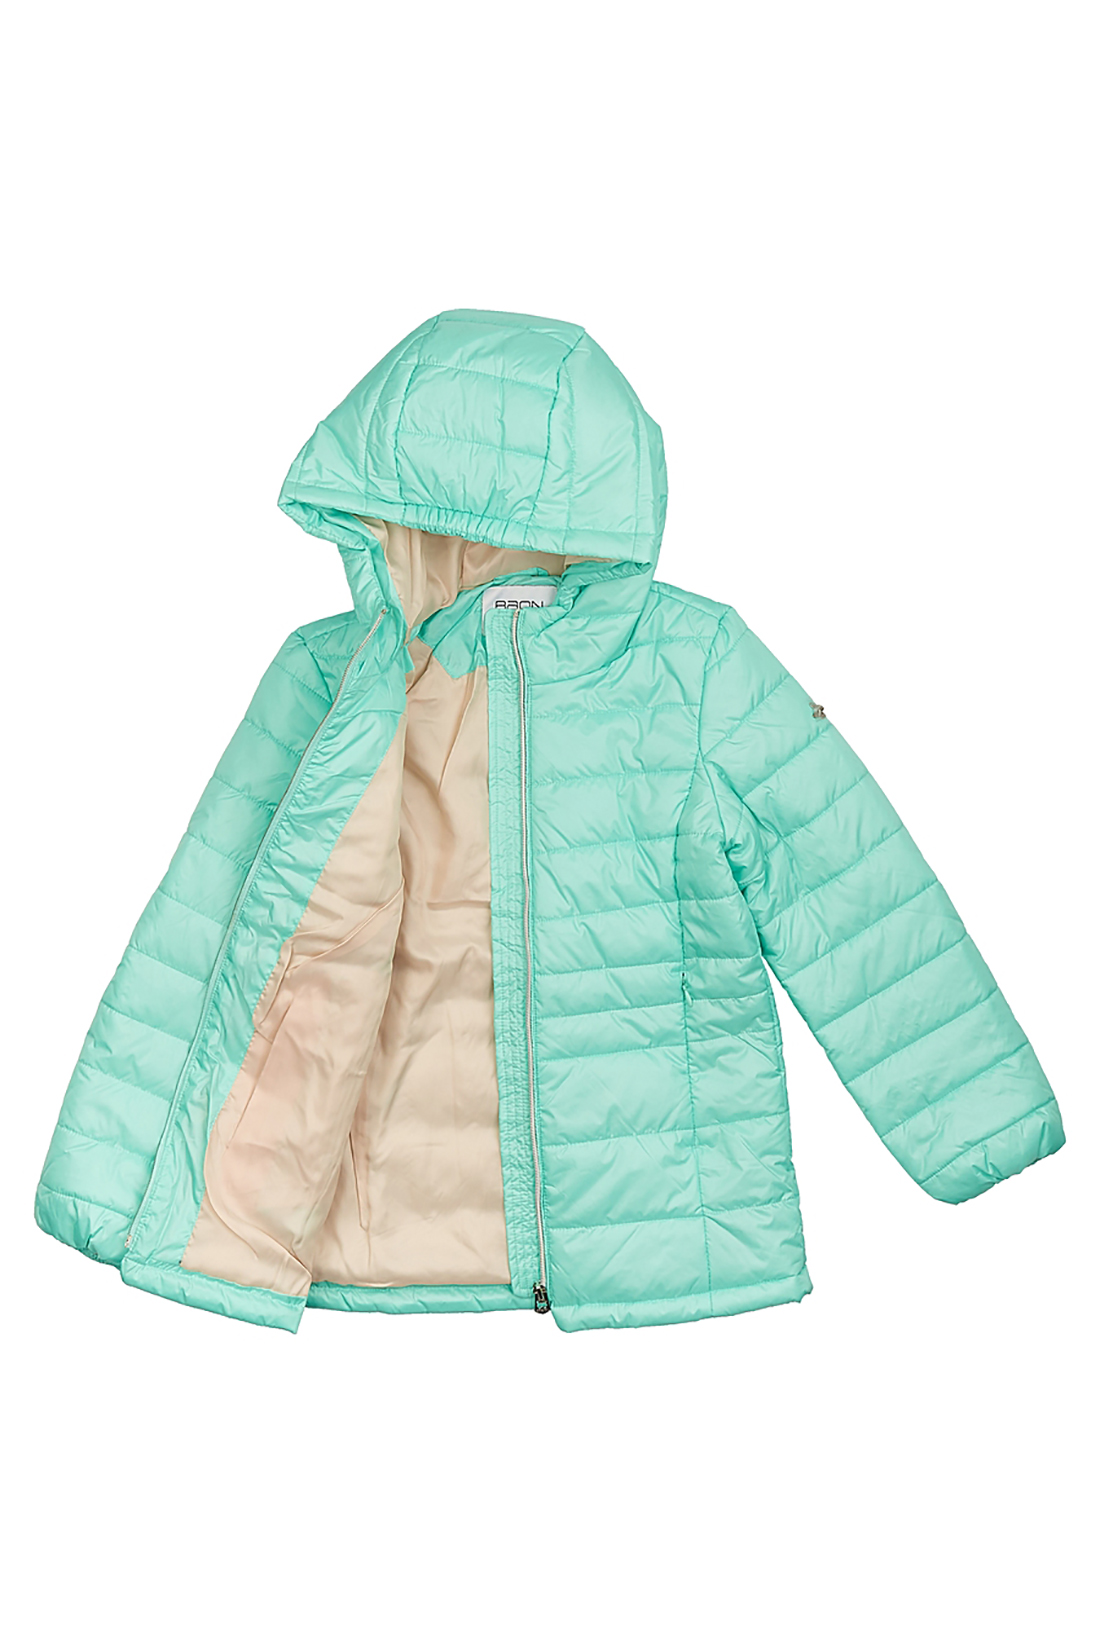 Куртка для девочки (арт. baon BJ038001), размер 158, цвет зеленый Куртка для девочки (арт. baon BJ038001) - фото 3